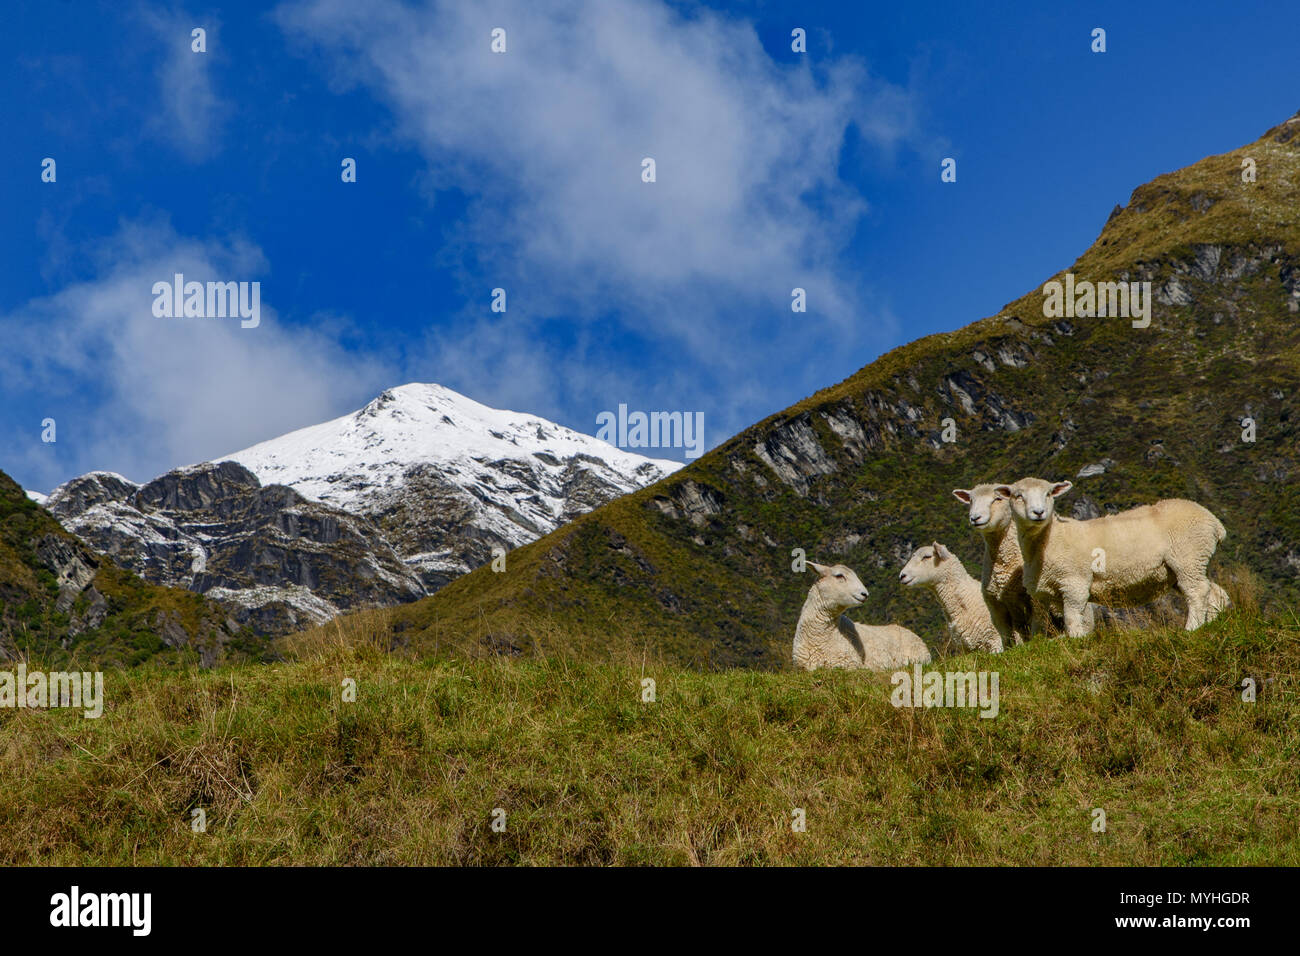 Sheep and natural views in Matukituki Valley area, Mount Aspiring National Park, South Island, New Zealand Stock Photo